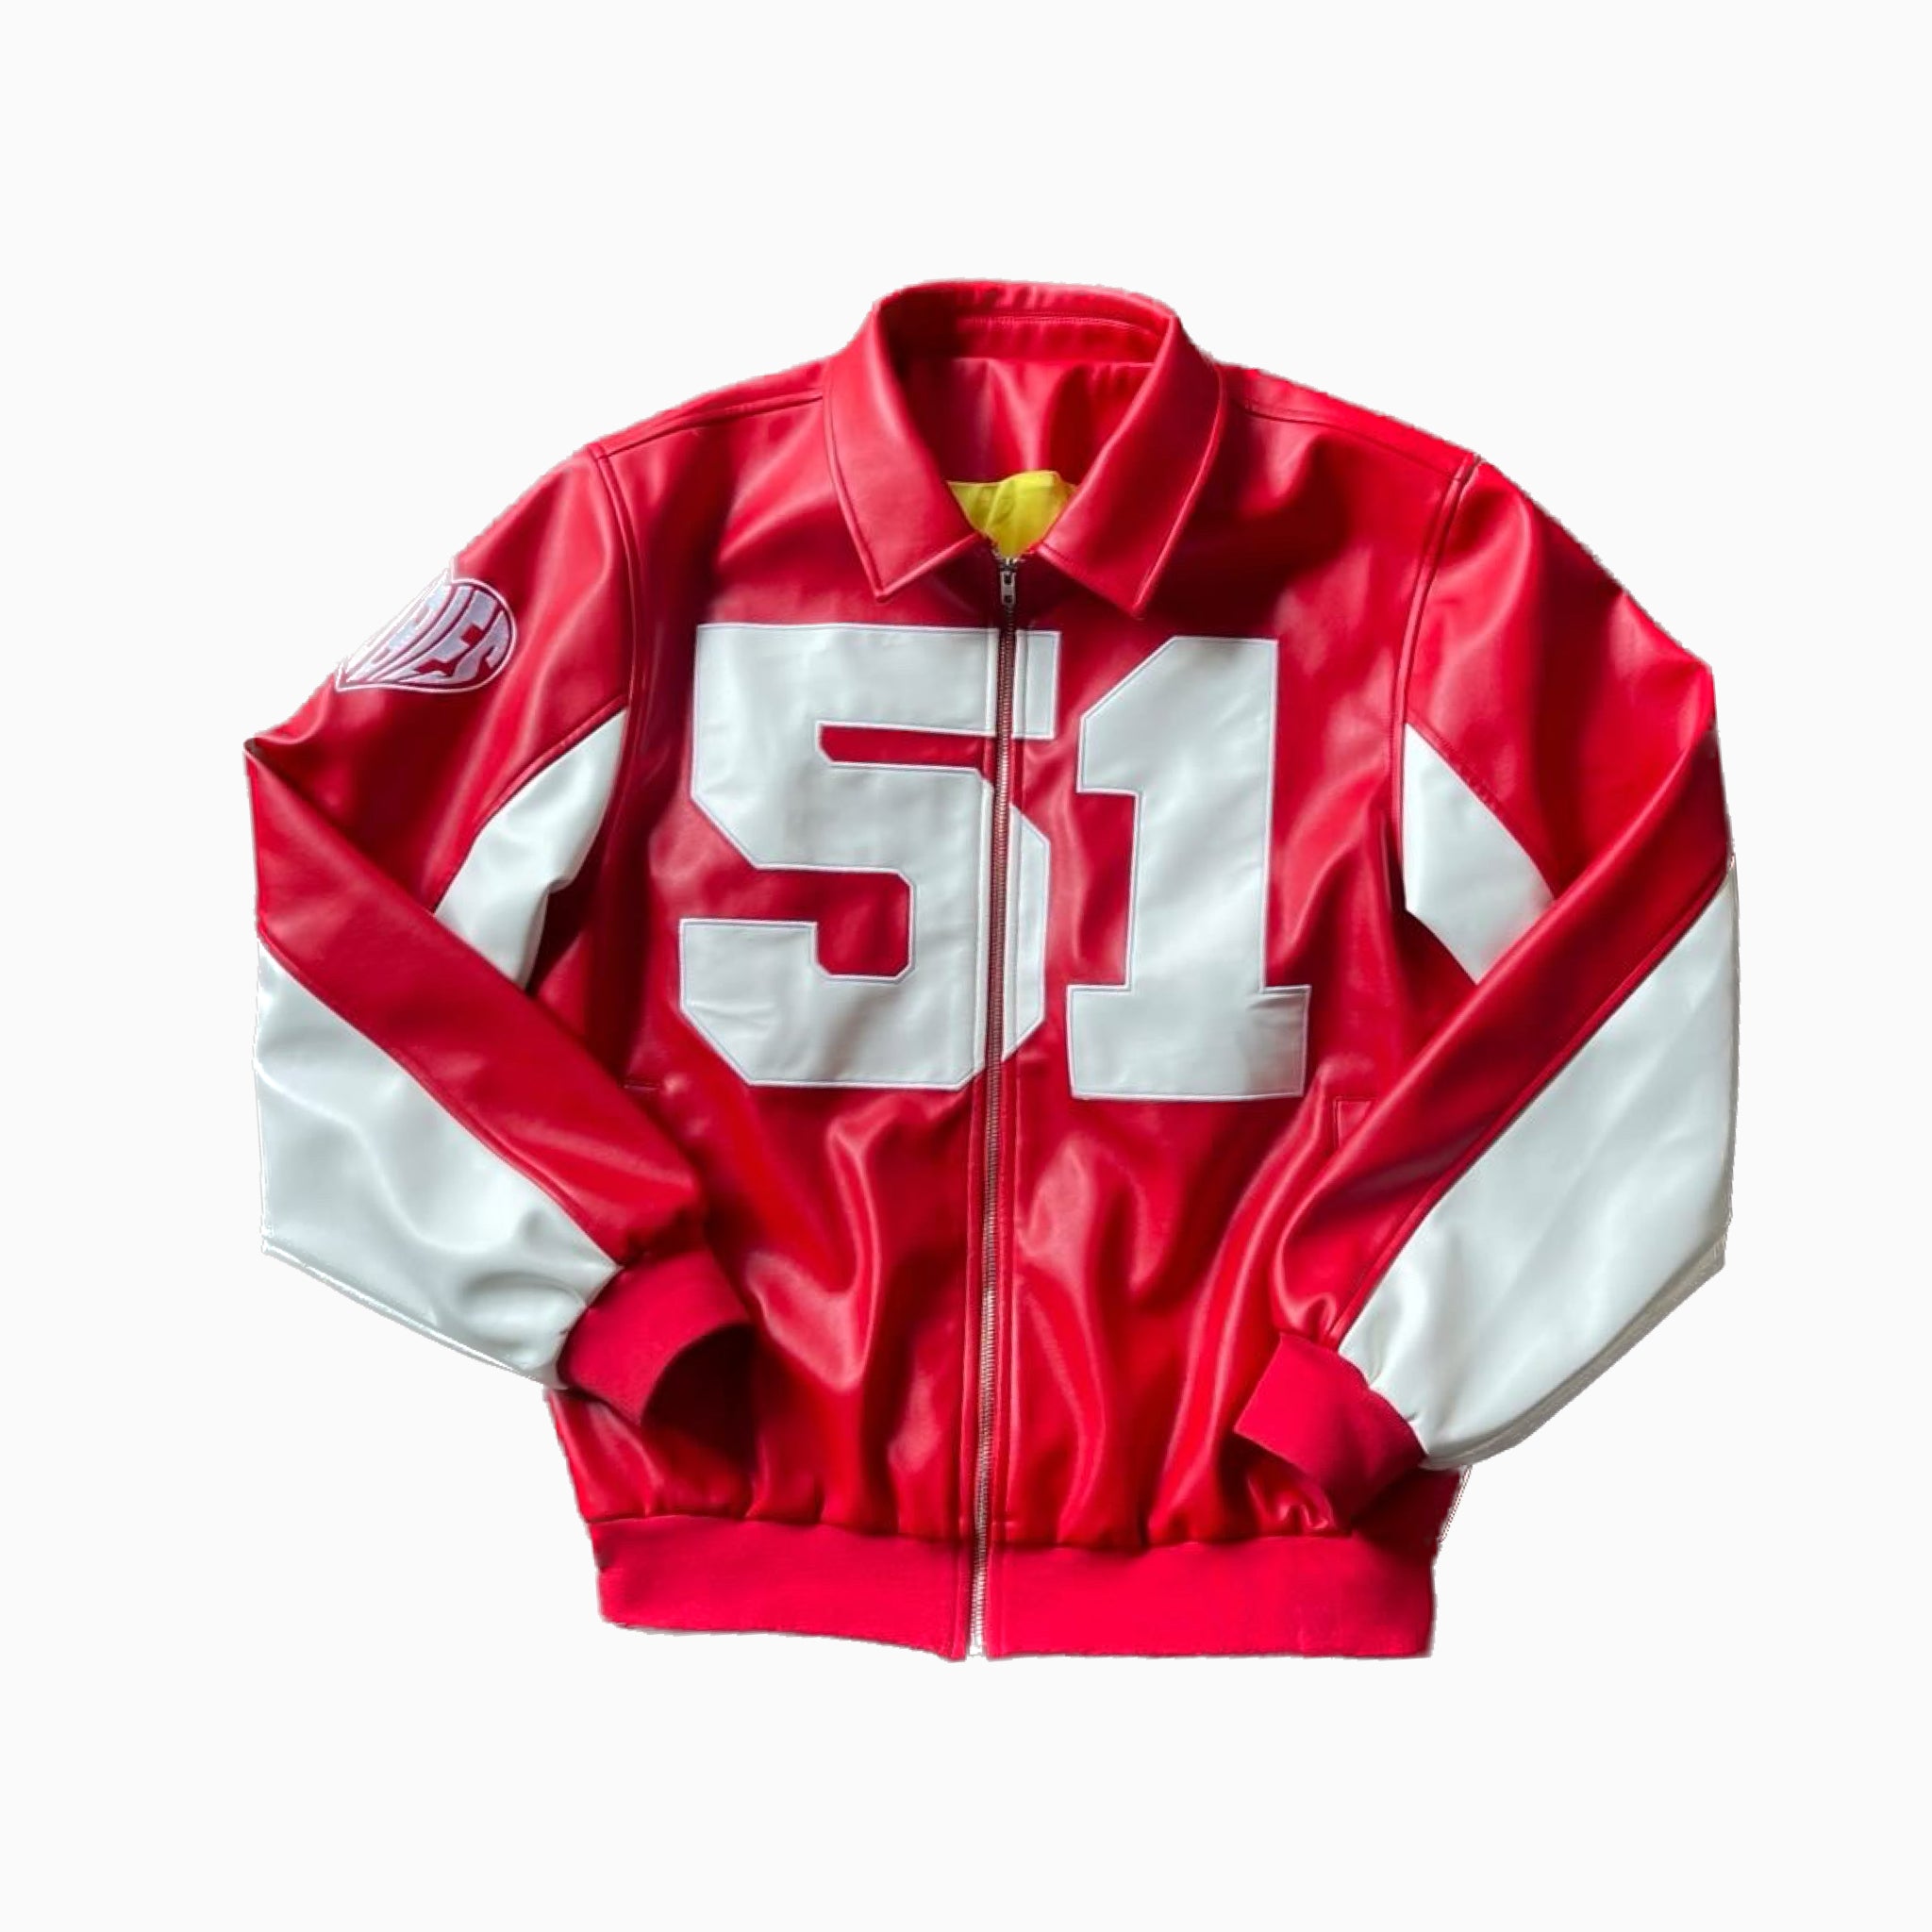 Red “51” chaidez jacket